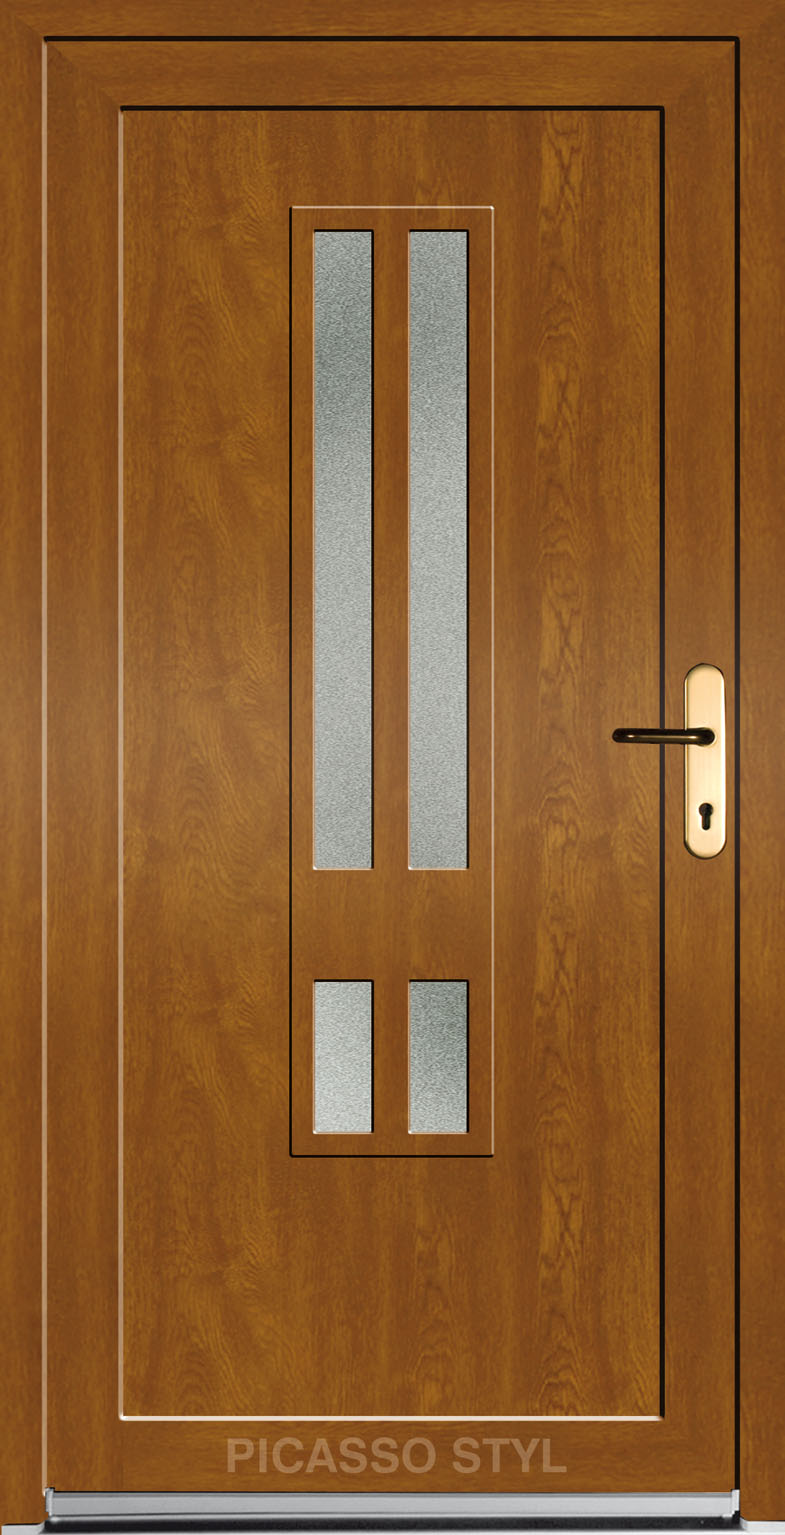 H2-interier-dvere-picasso-styl.jpg